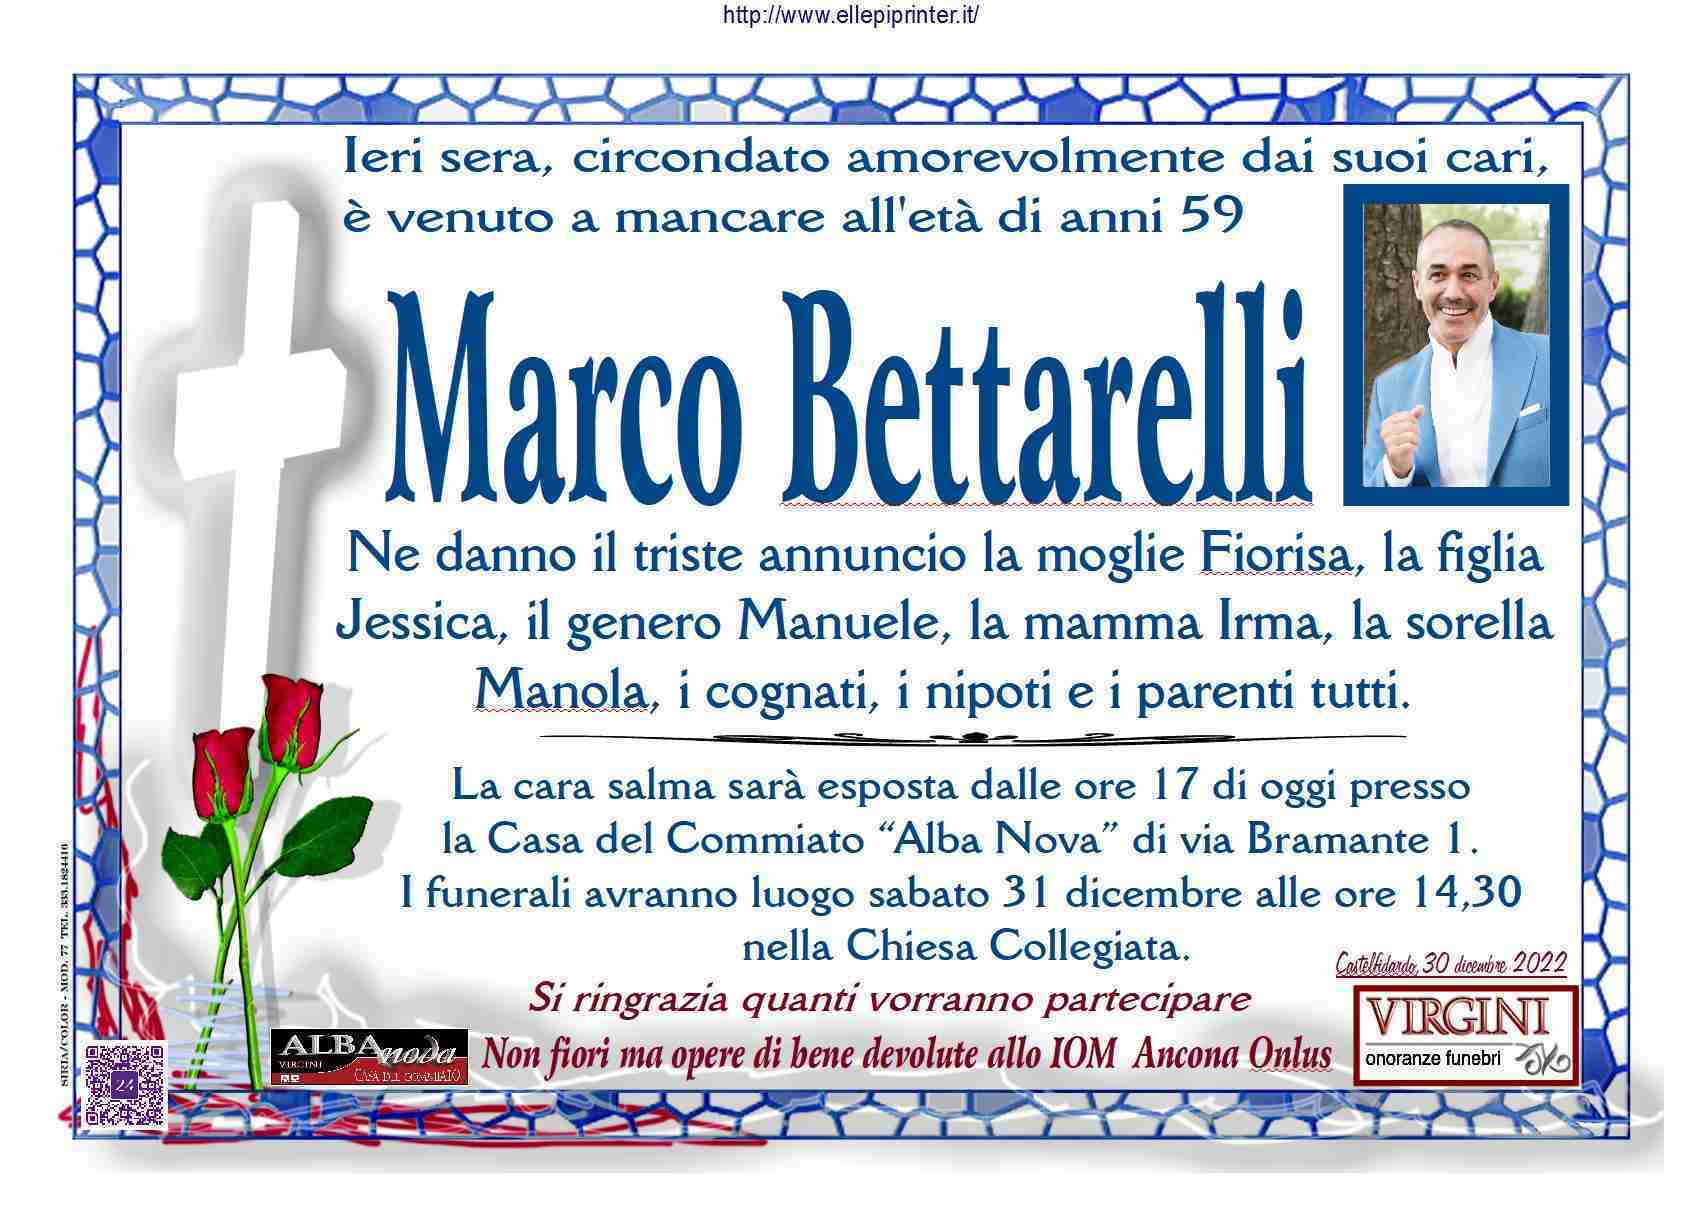 Marco Bettarelli